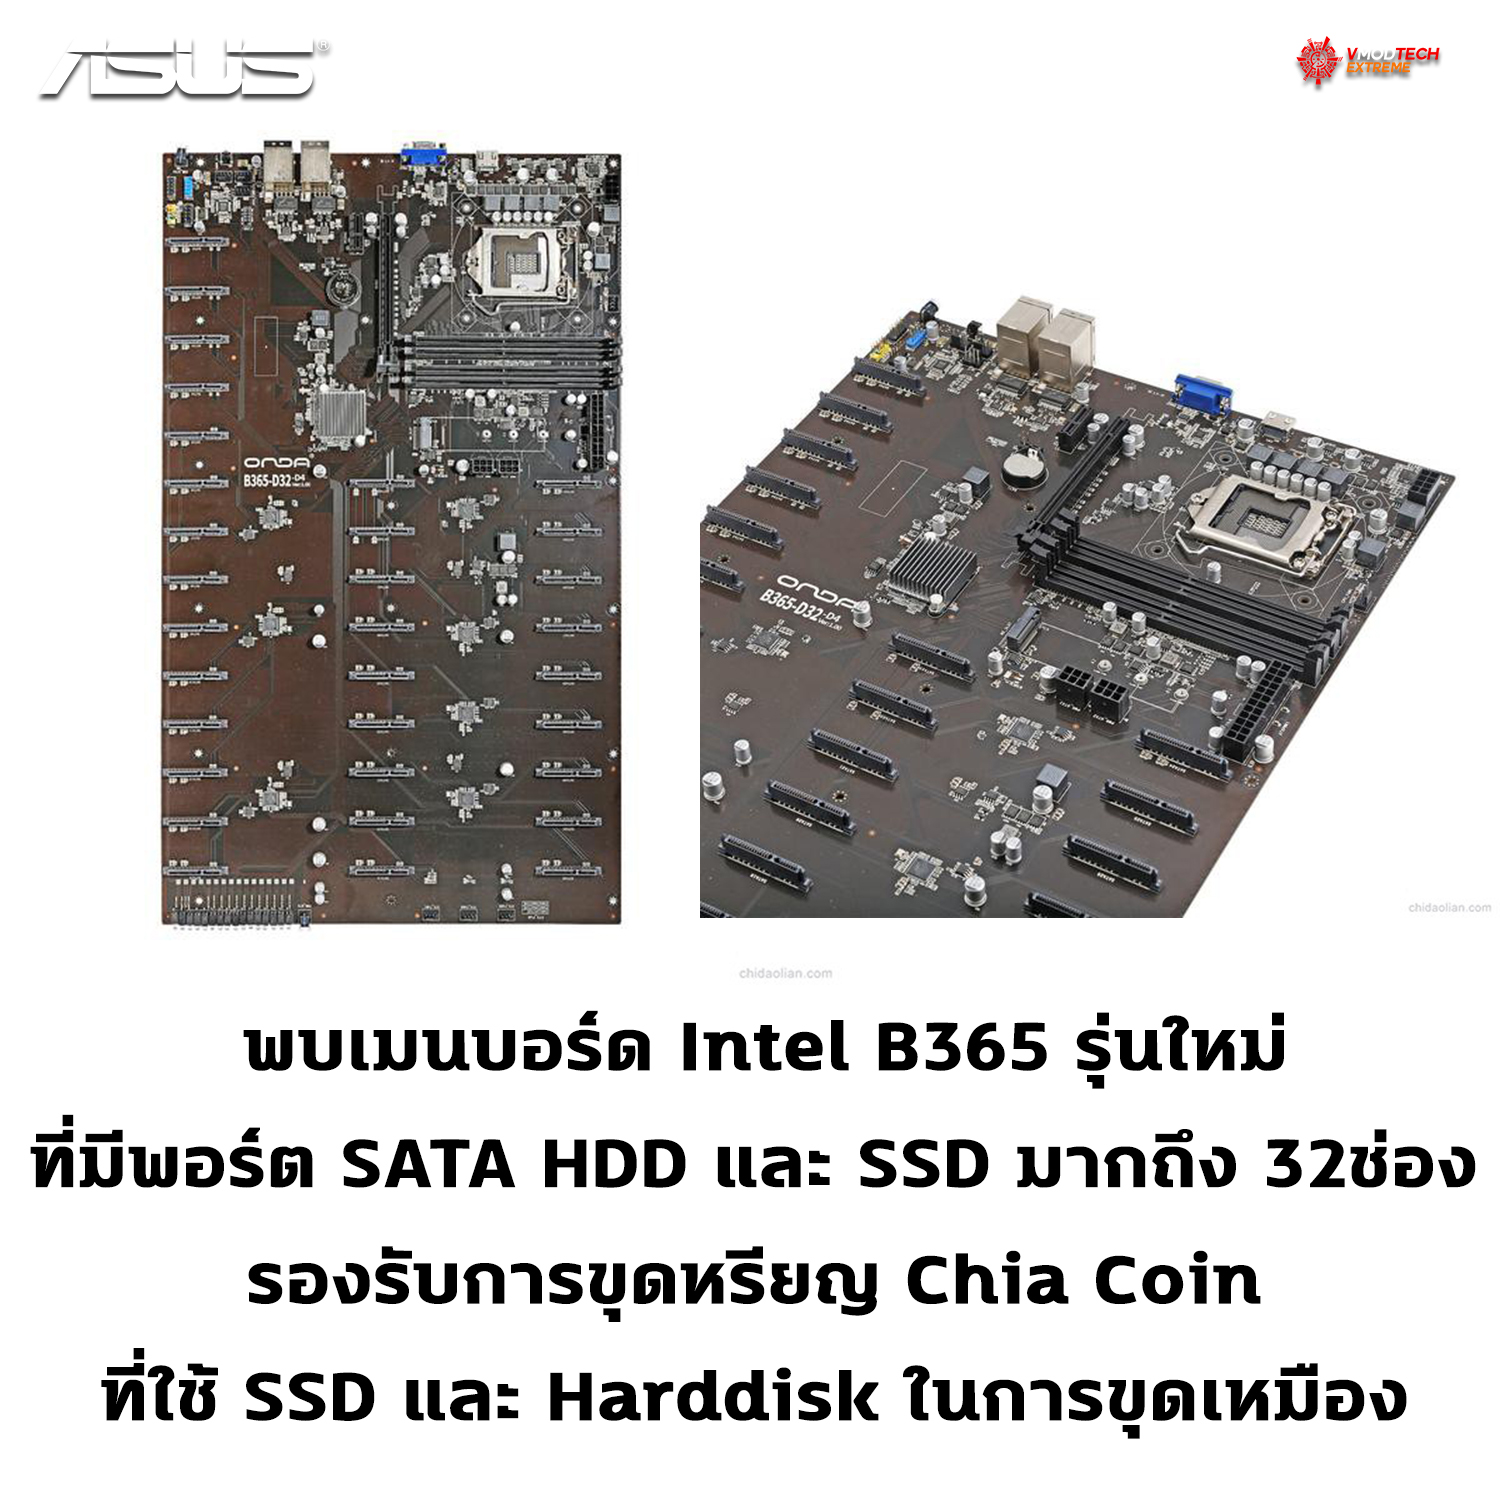 chia coin sata hdd ssd พบเมนบอร์ดรุ่นใหม่ที่มีพอร์ต SATA HDD และ SSD มากถึง 32ช่อง รองรับการขุดหรียญ Chia Coin ที่ใช้ SSD และ Harddisk ในการขุดเหมือง 